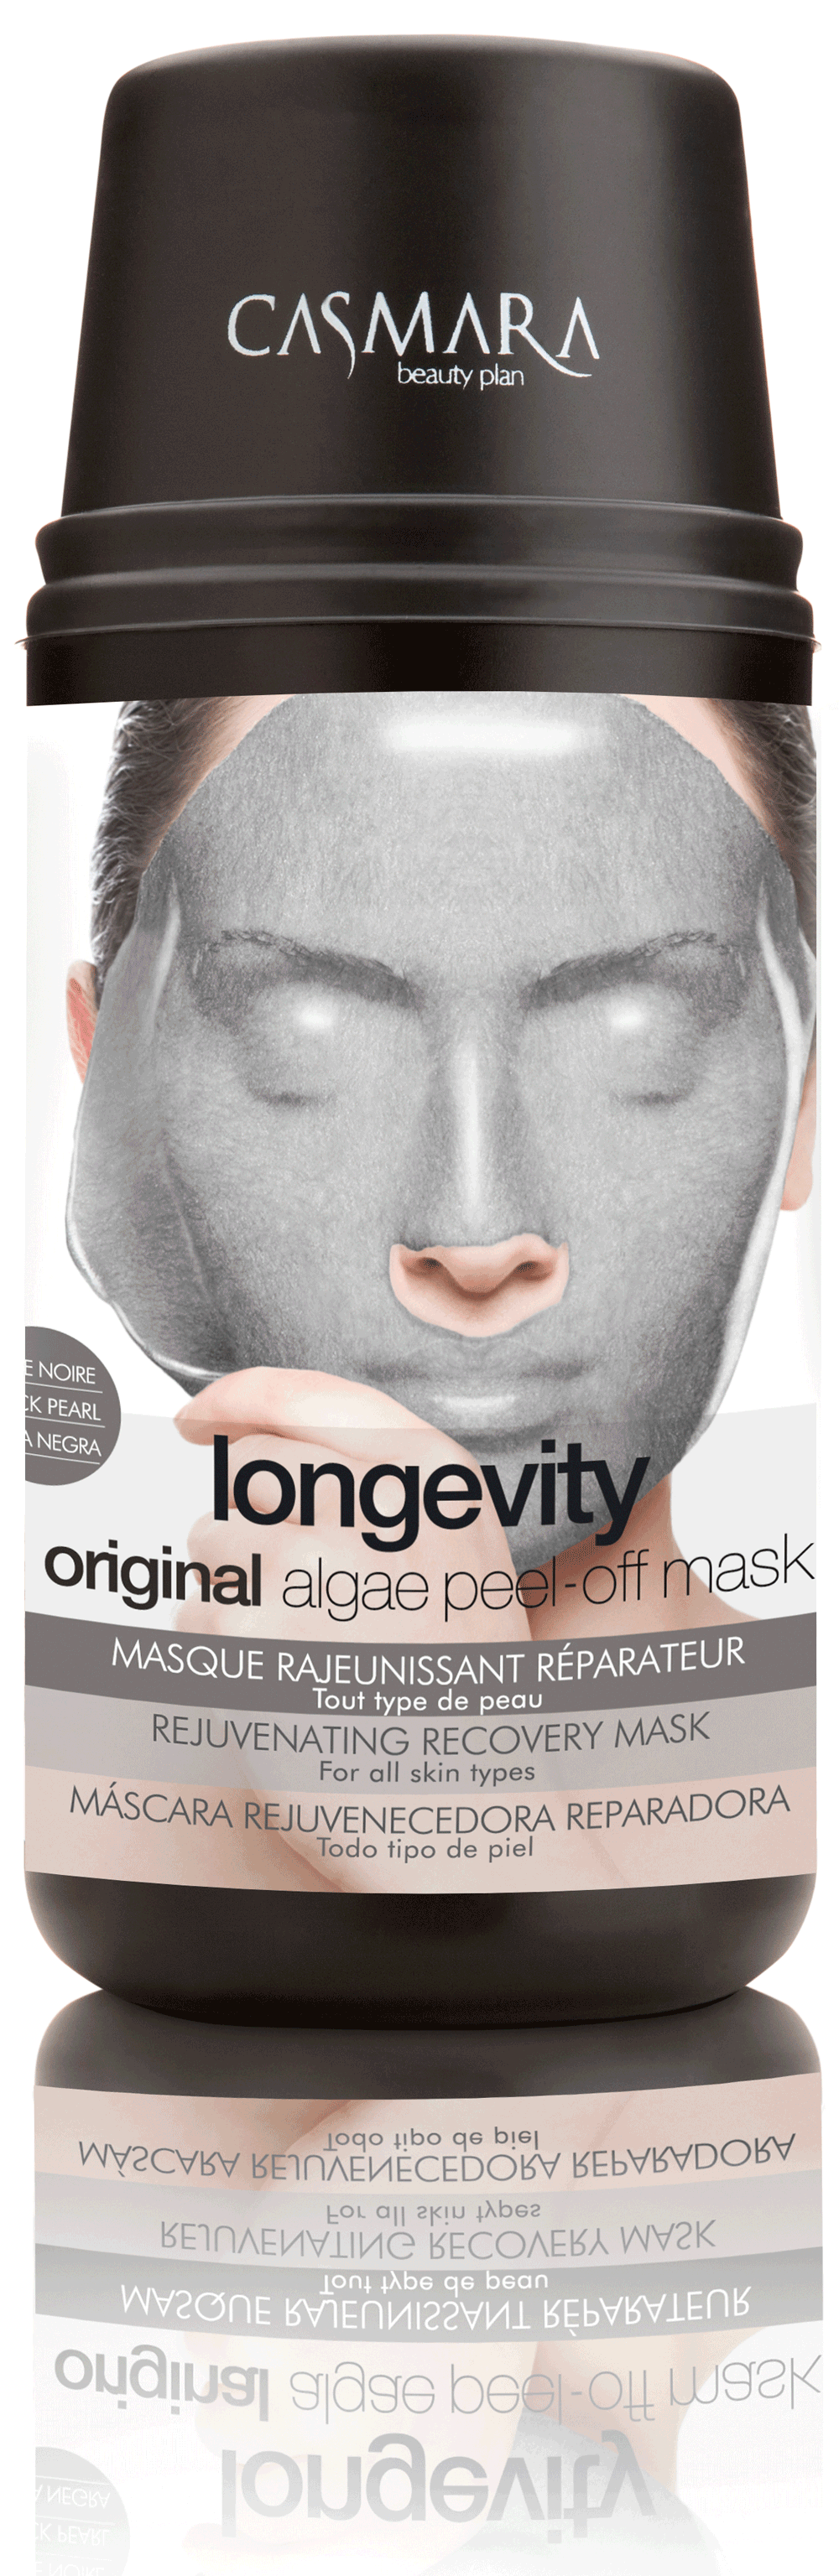 Longevity Mask Kit